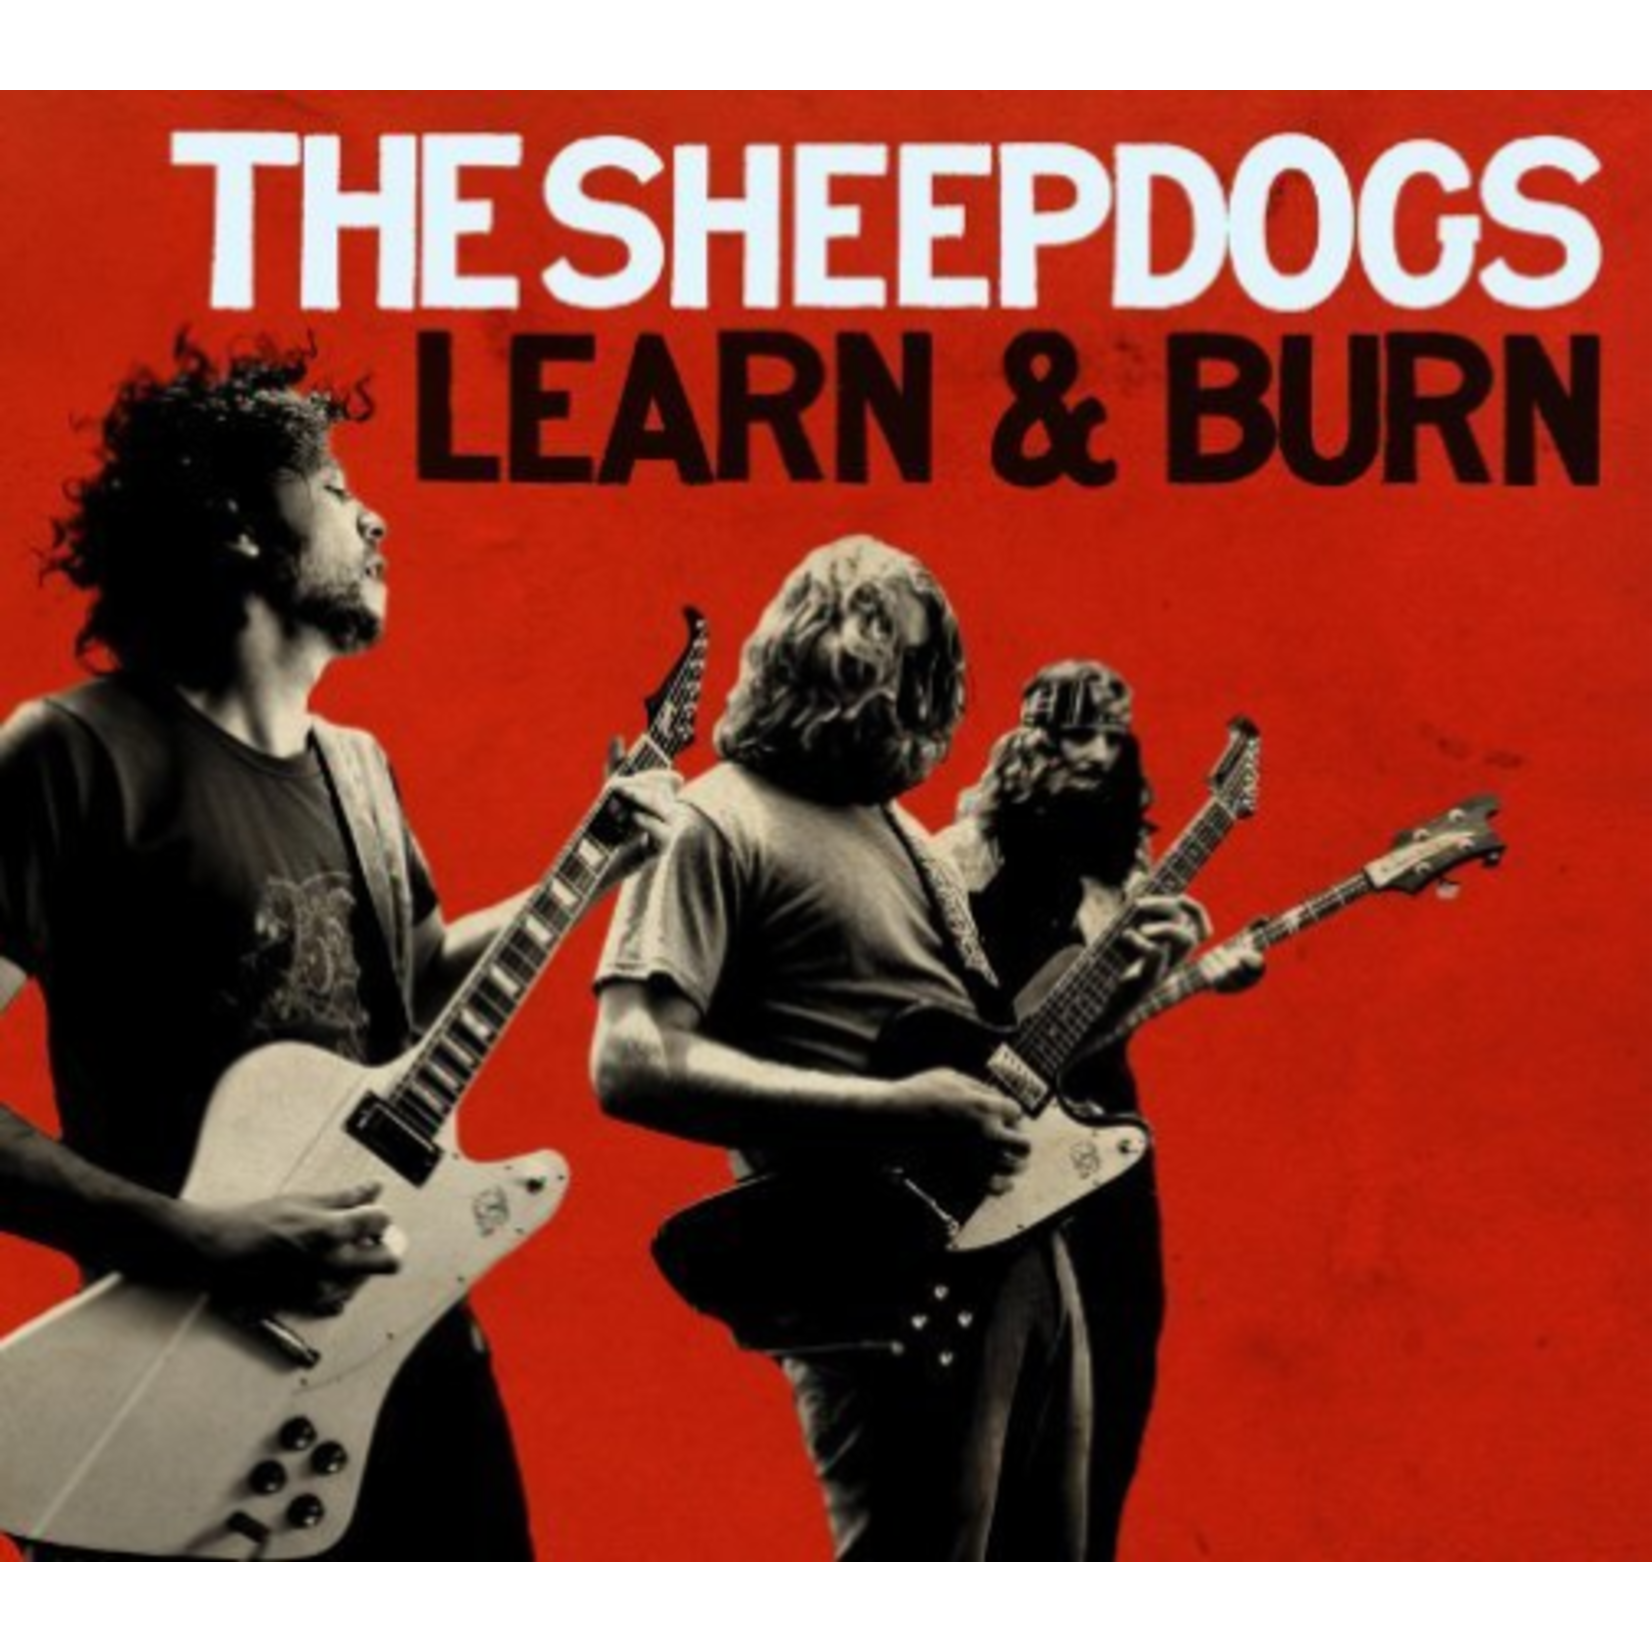 Sheepdogs - Learn & Burn [USED CD]